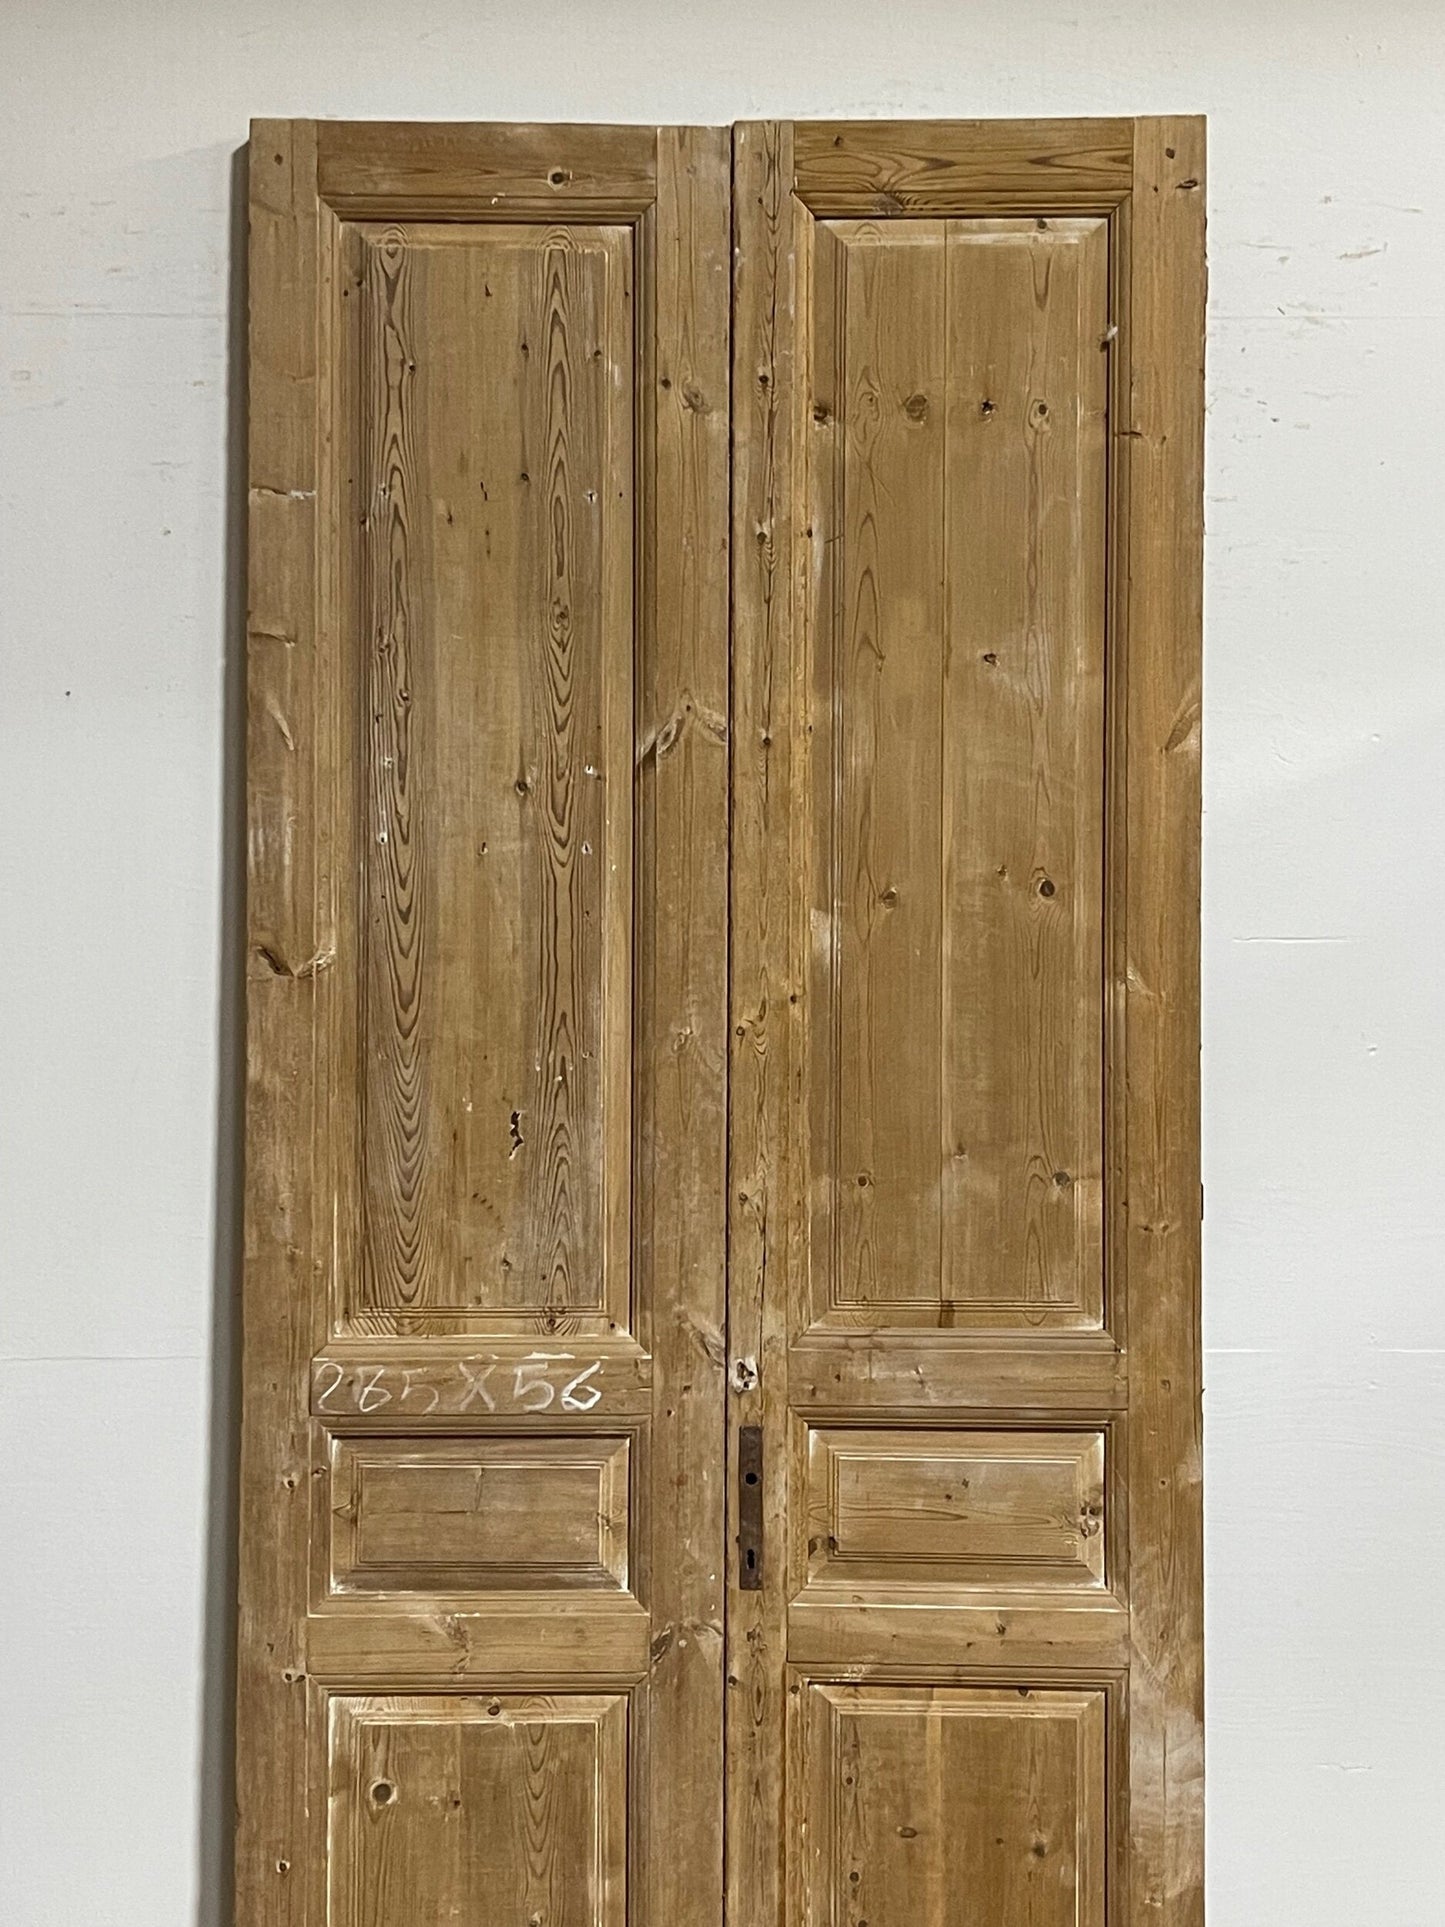 Antique French doors (104.25x43.25) H0096s